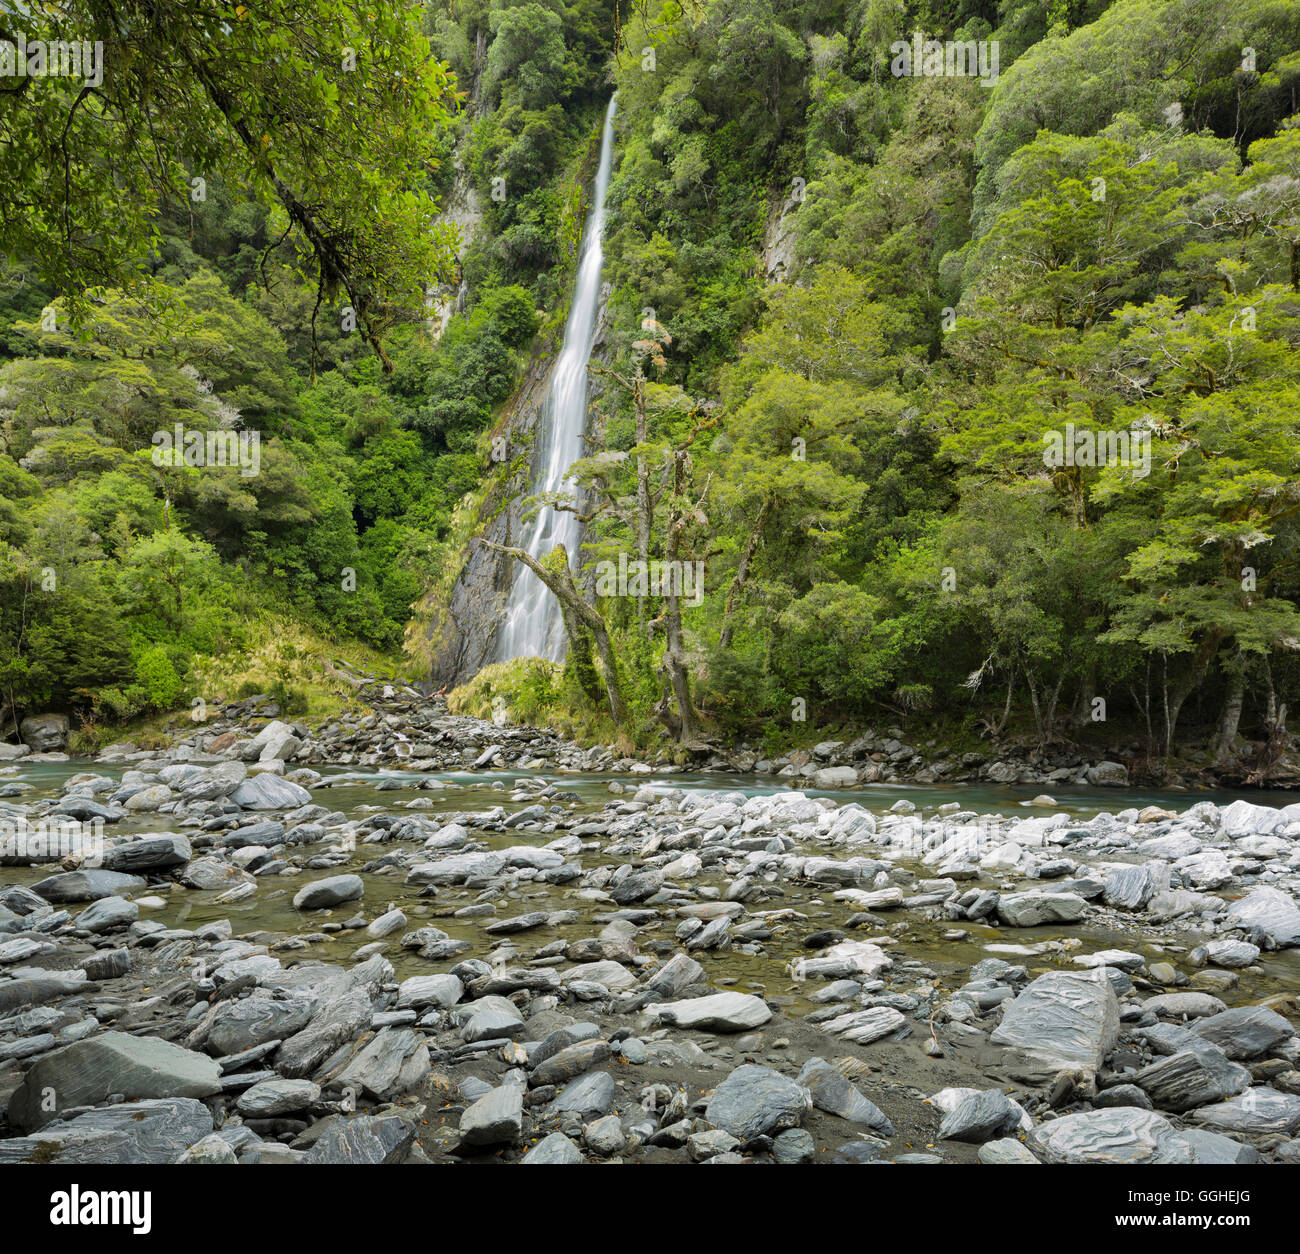 Thunder Creek Falls, montare gli aspiranti National Park, Hasst Pass, West Coast, Isola del Sud, Nuova Zelanda Foto Stock